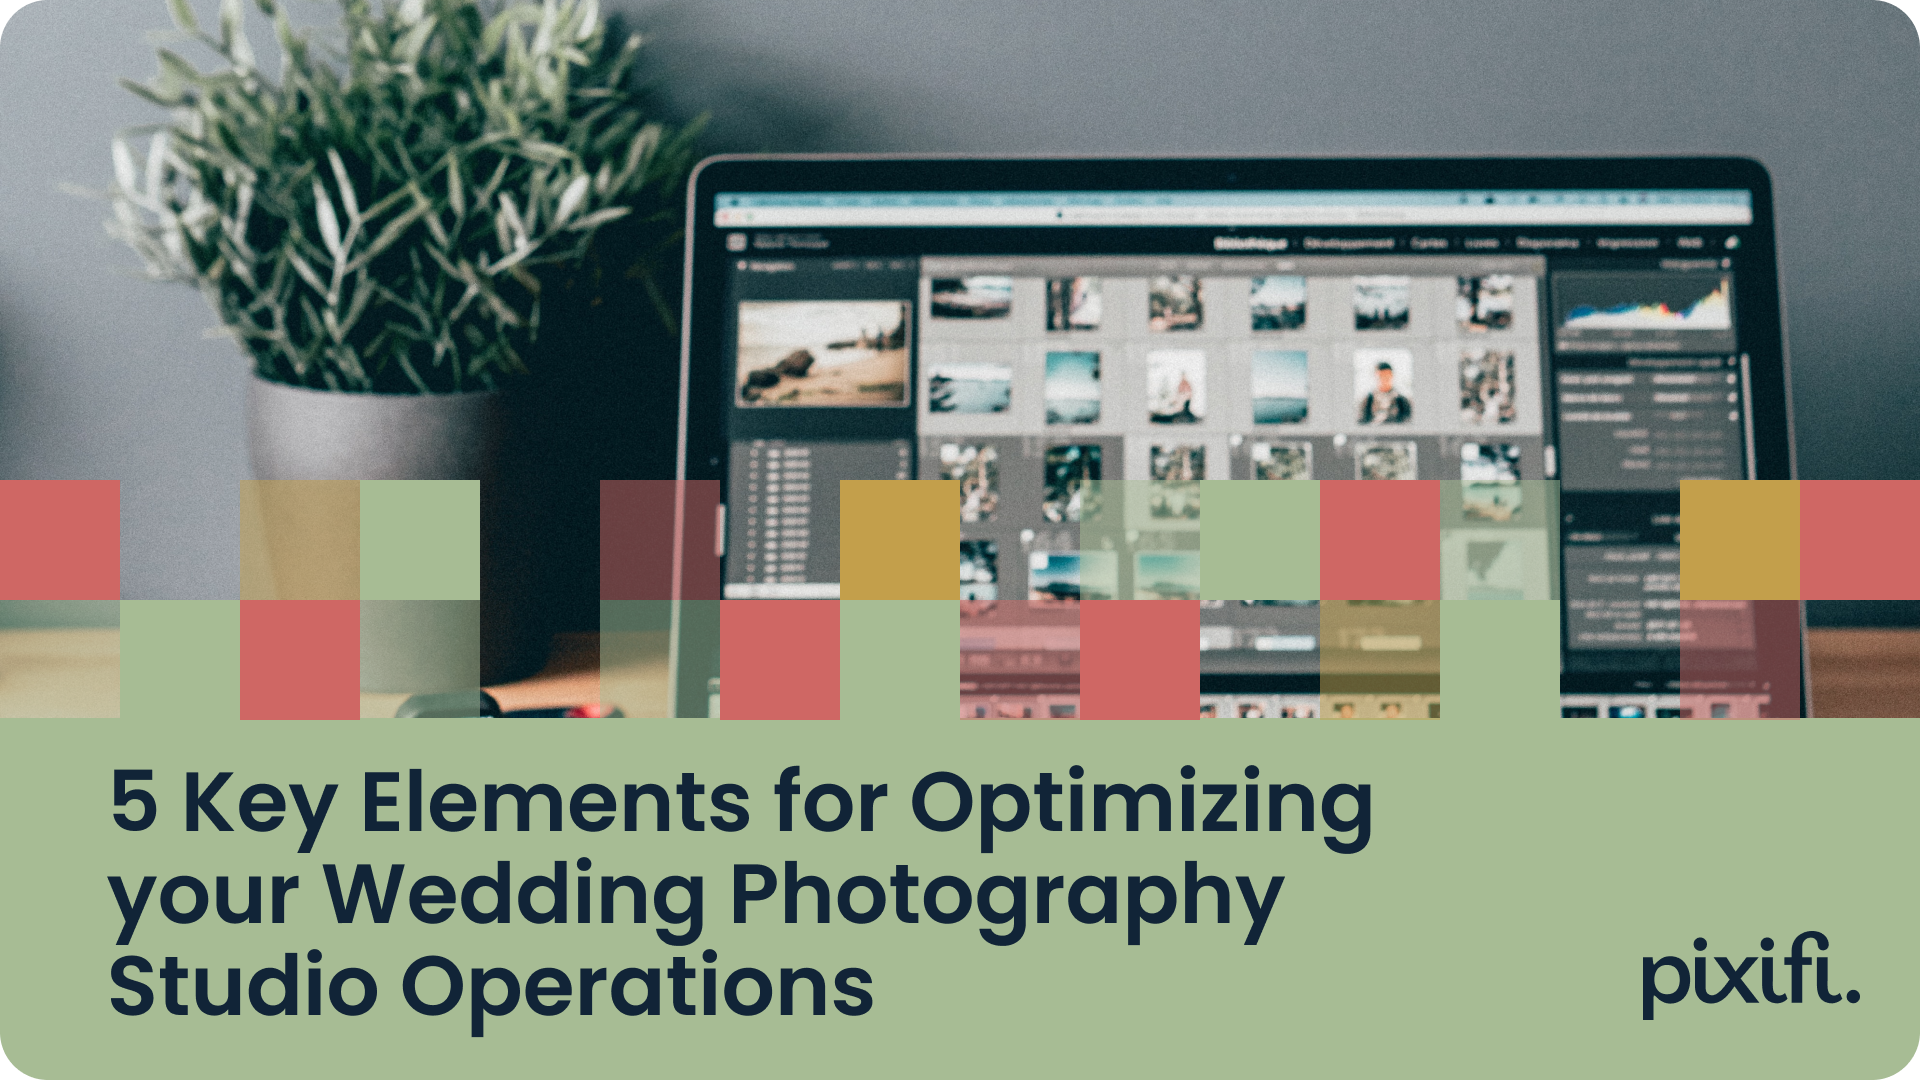 5 Key Elements for Optimizing your Wedding Photography Studio Operations